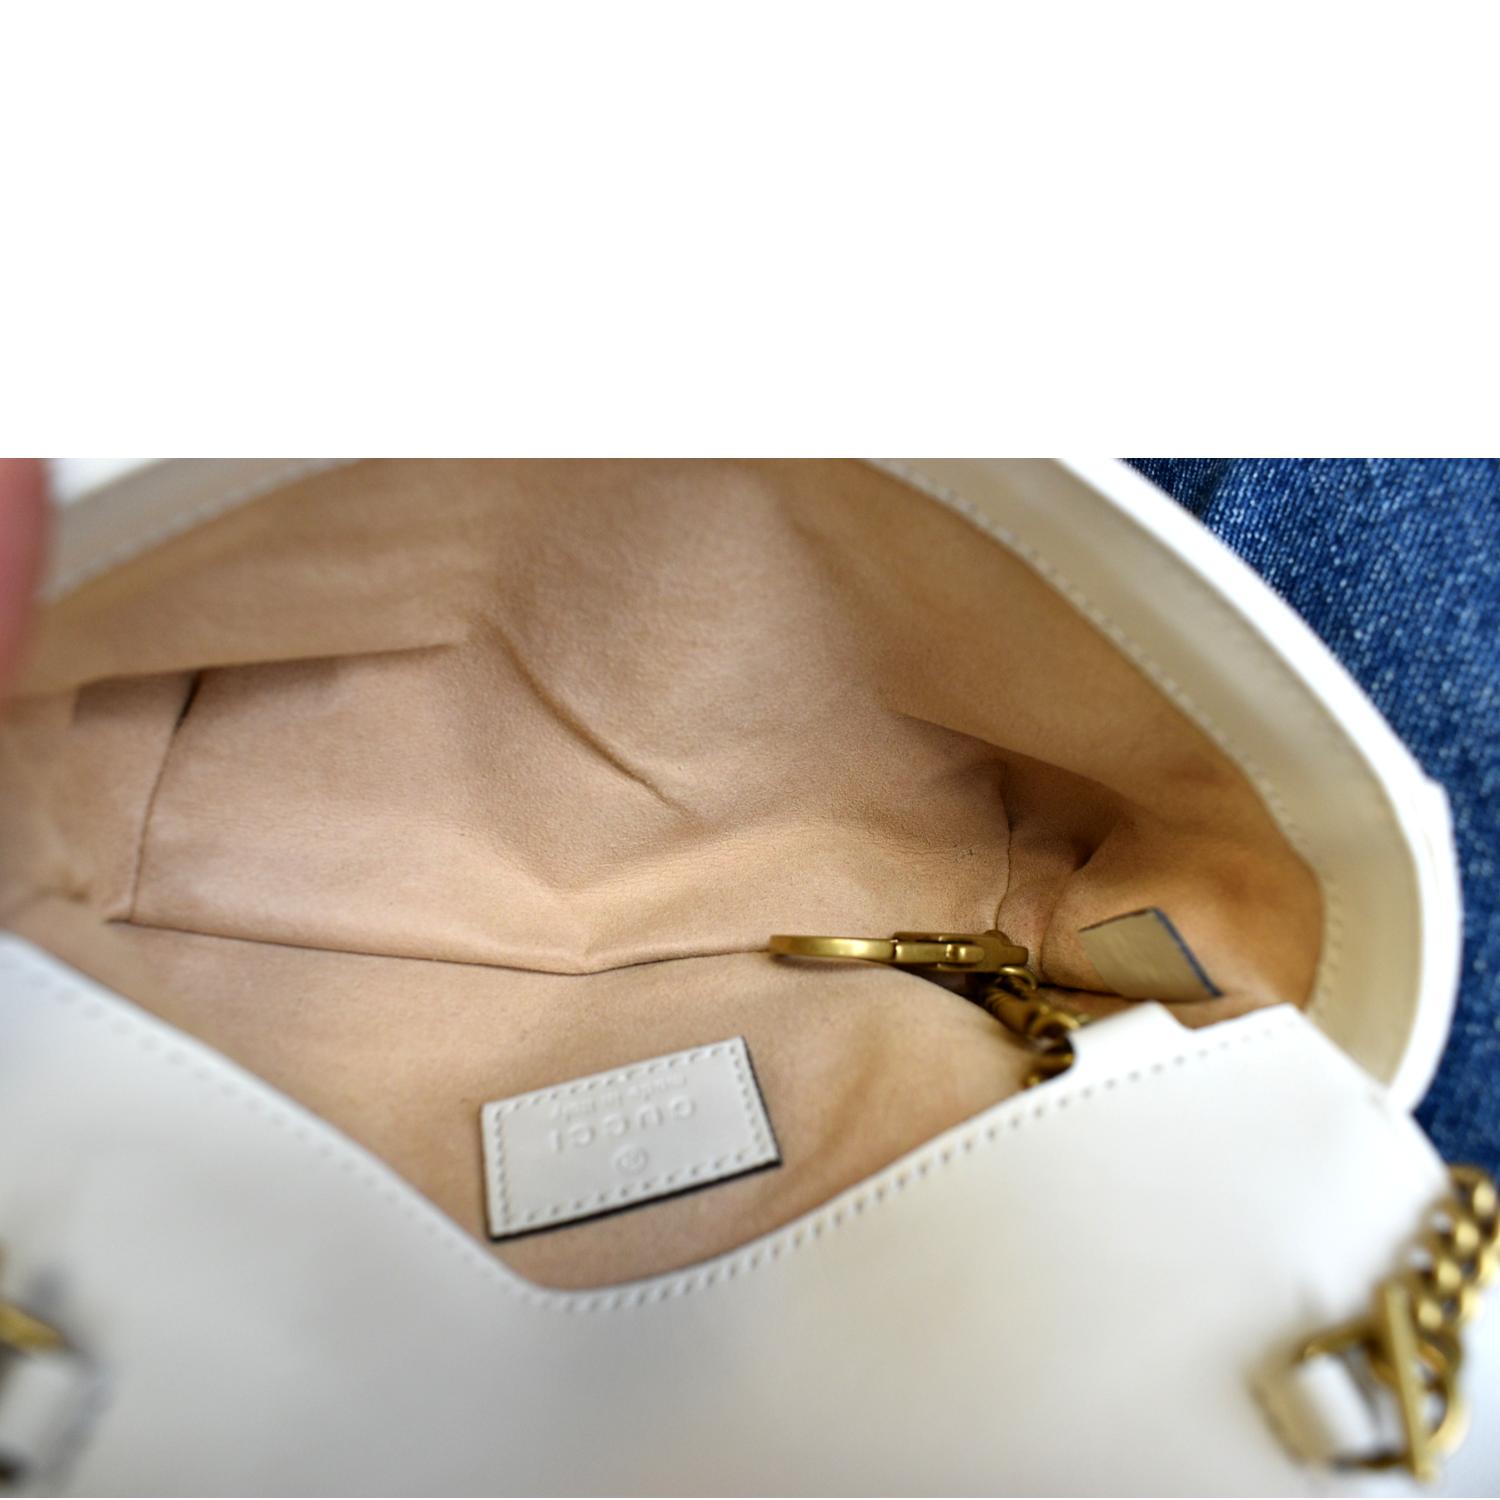 Gucci GG Marmont Super Mini Matelasse Leather Shoulder Bag White 476433